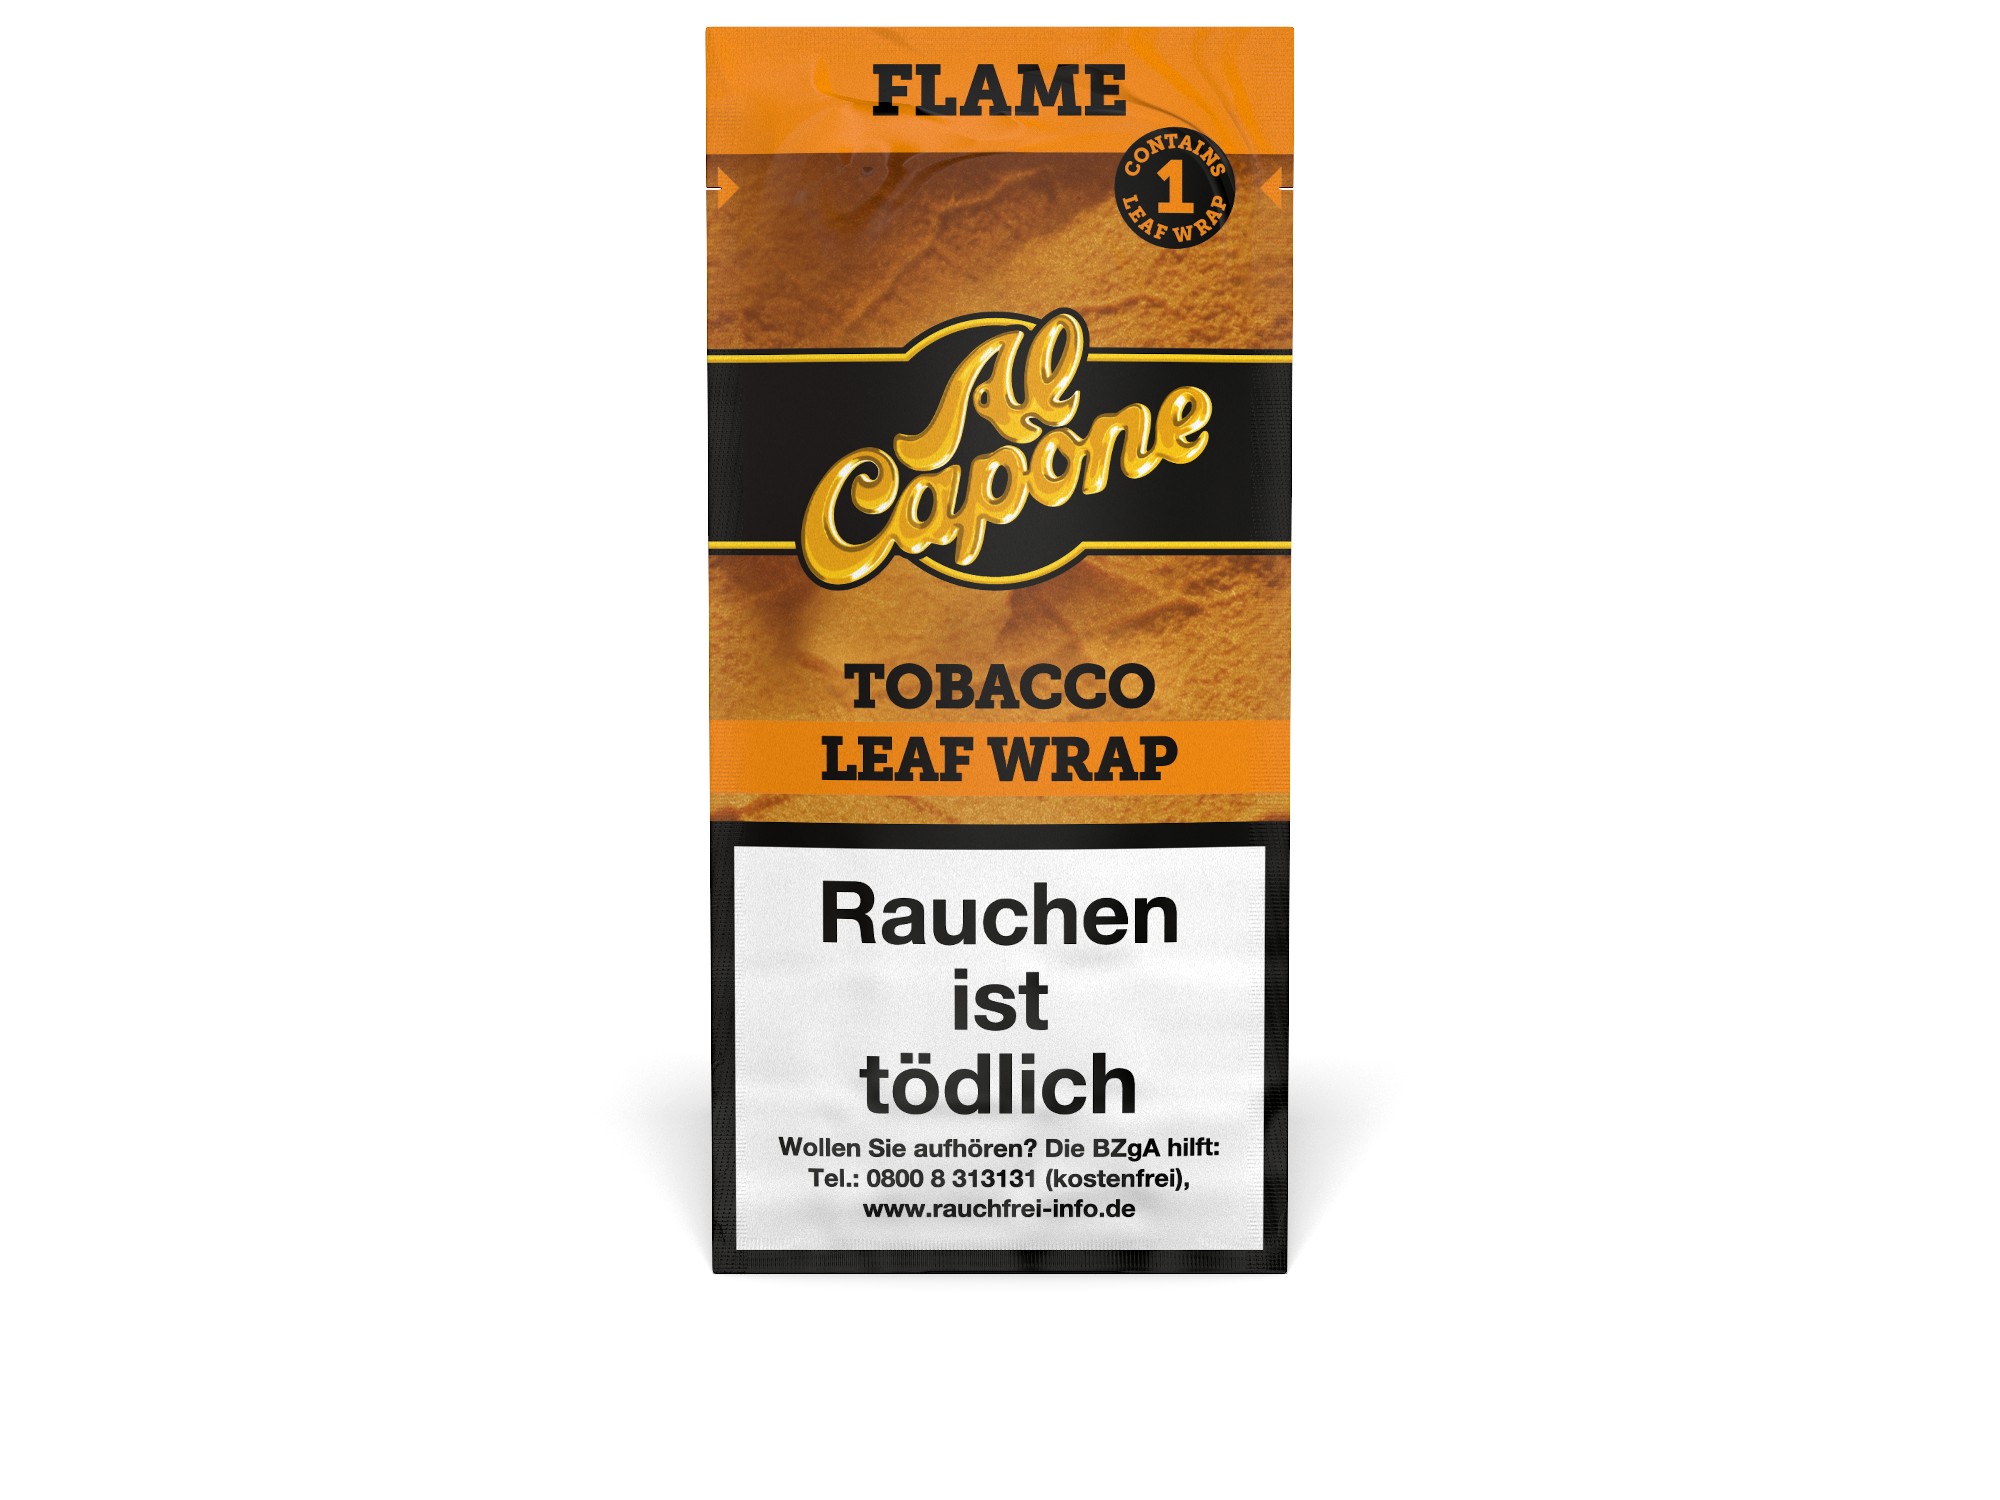 Al Capone Flame Leaf Wrap